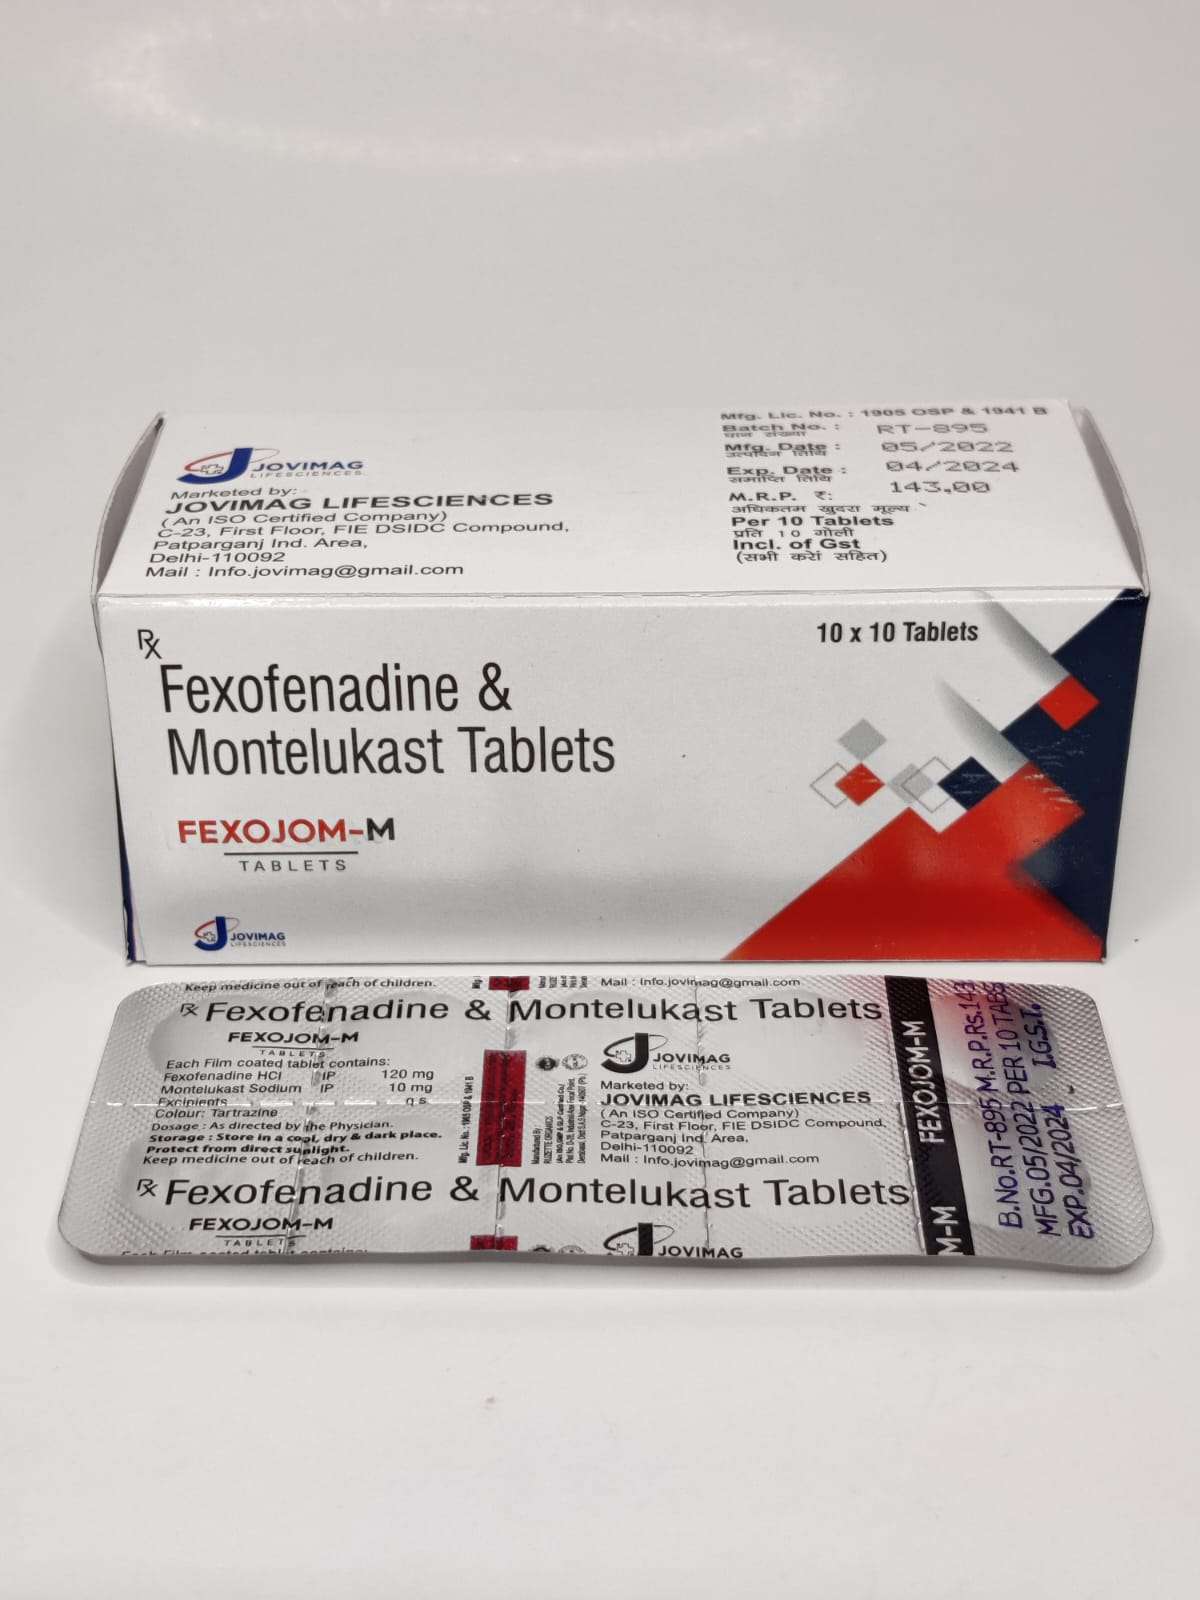 fexofenadine hcl 120 mg+montelukast 10 mg